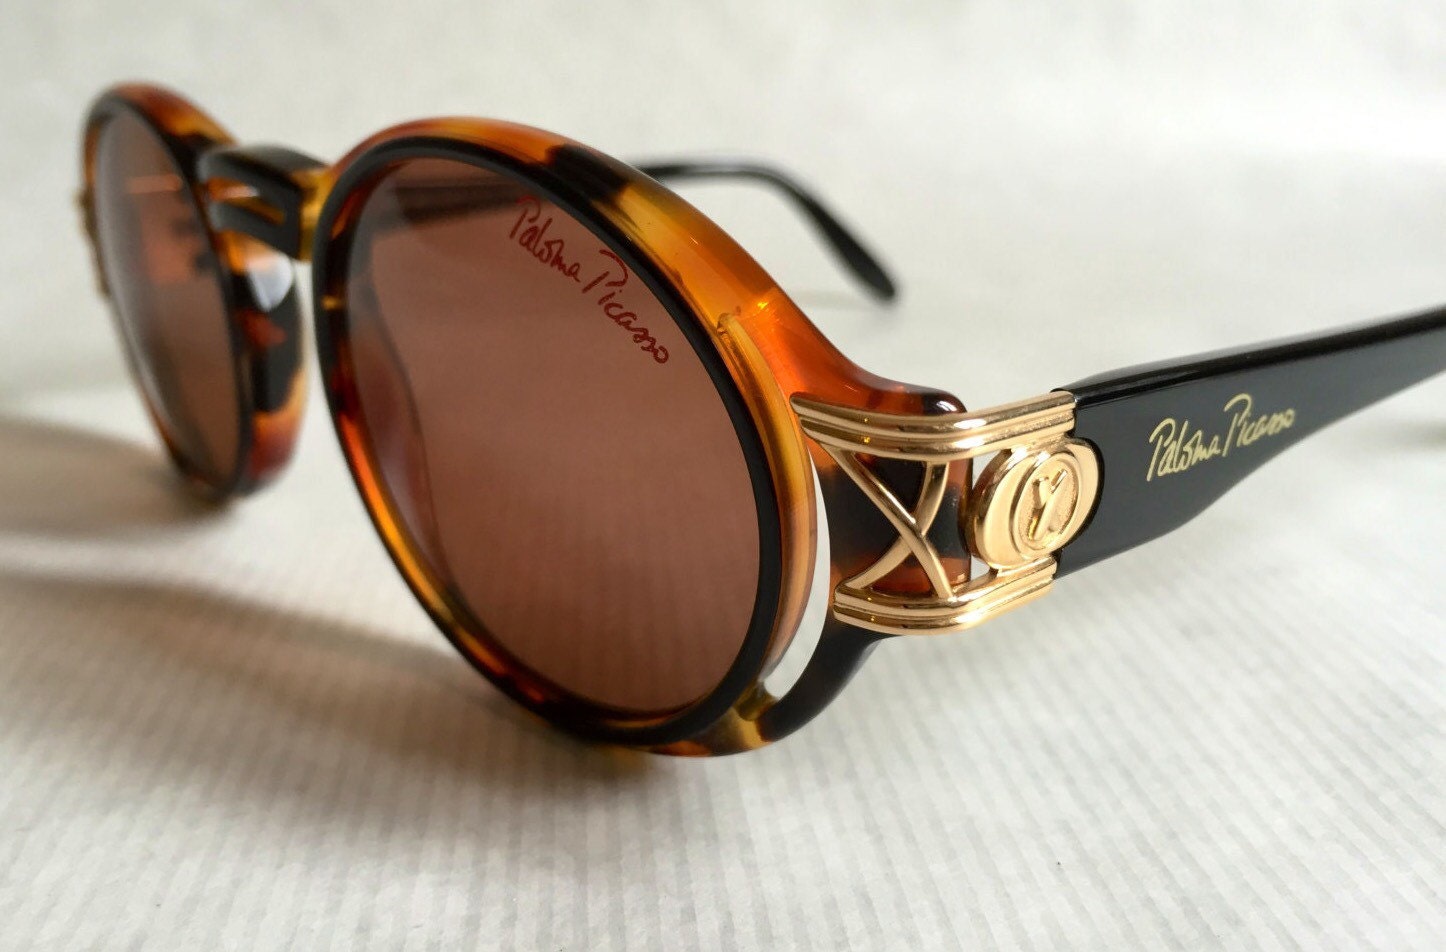 Paloma Picasso 8801 Vintage Sunglasses including Case - New Unworn ...